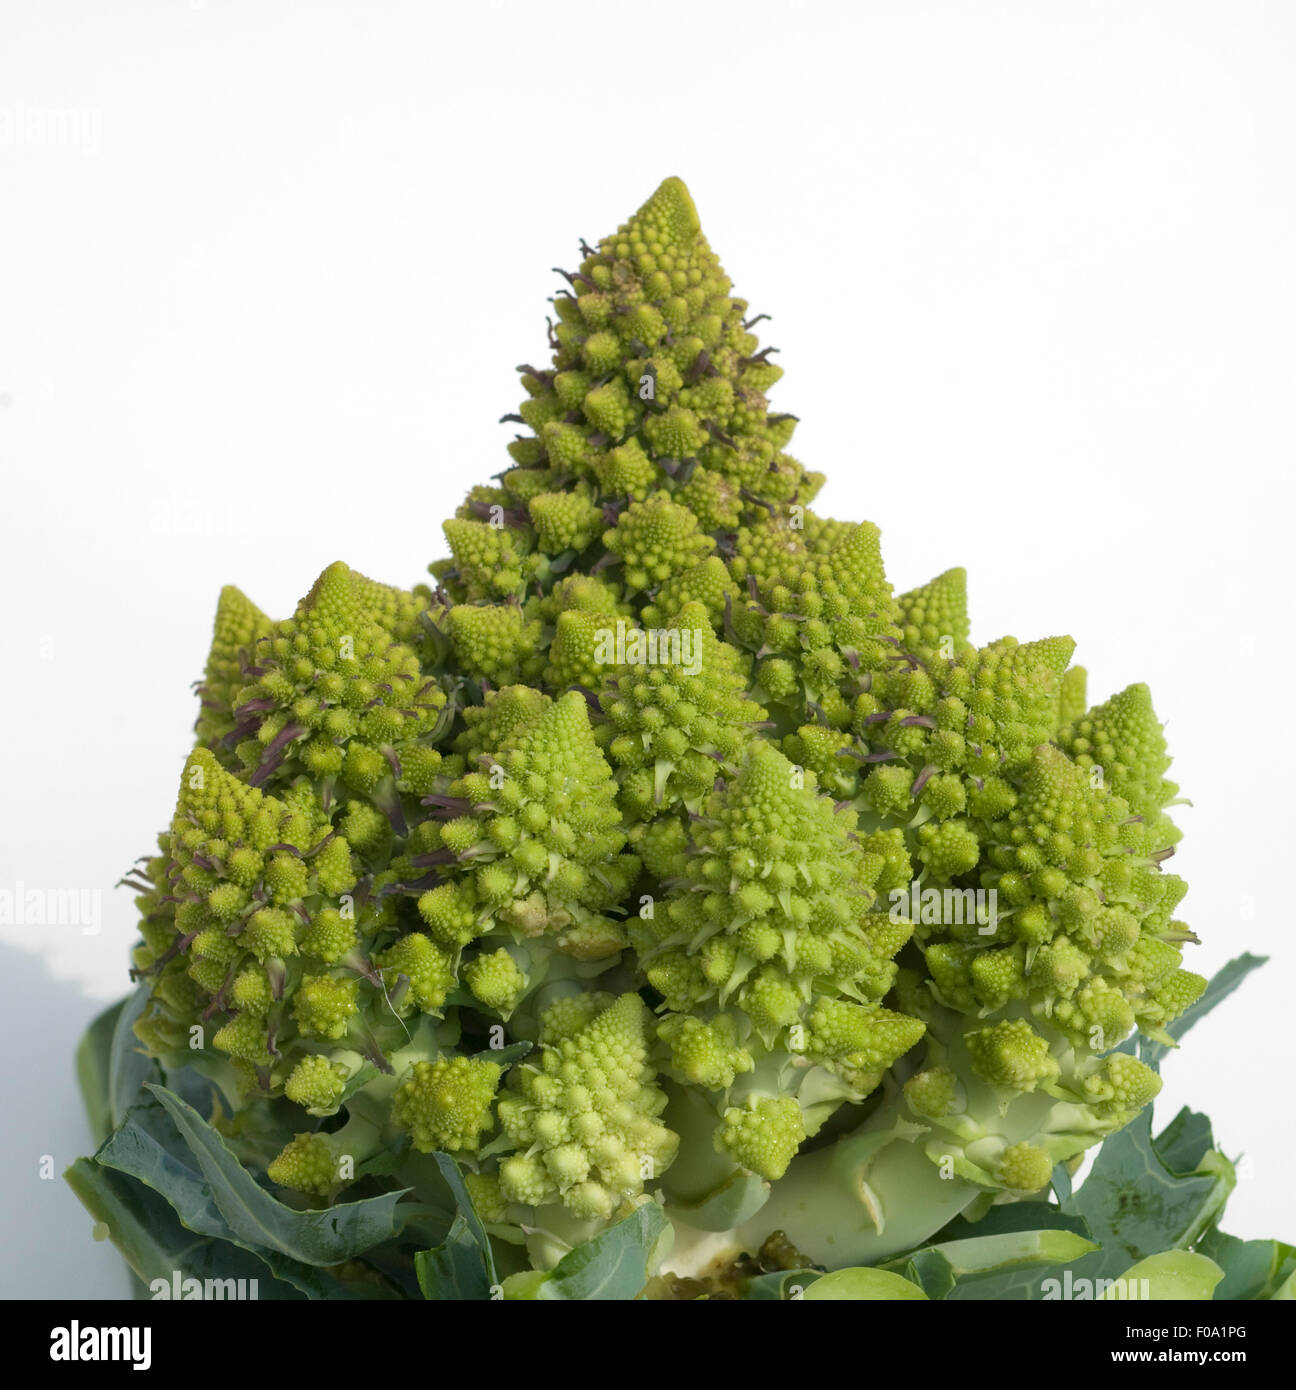 Blumenkohl, Minaret, Brassica oleracea botrytis, Kohl, Stock Photo